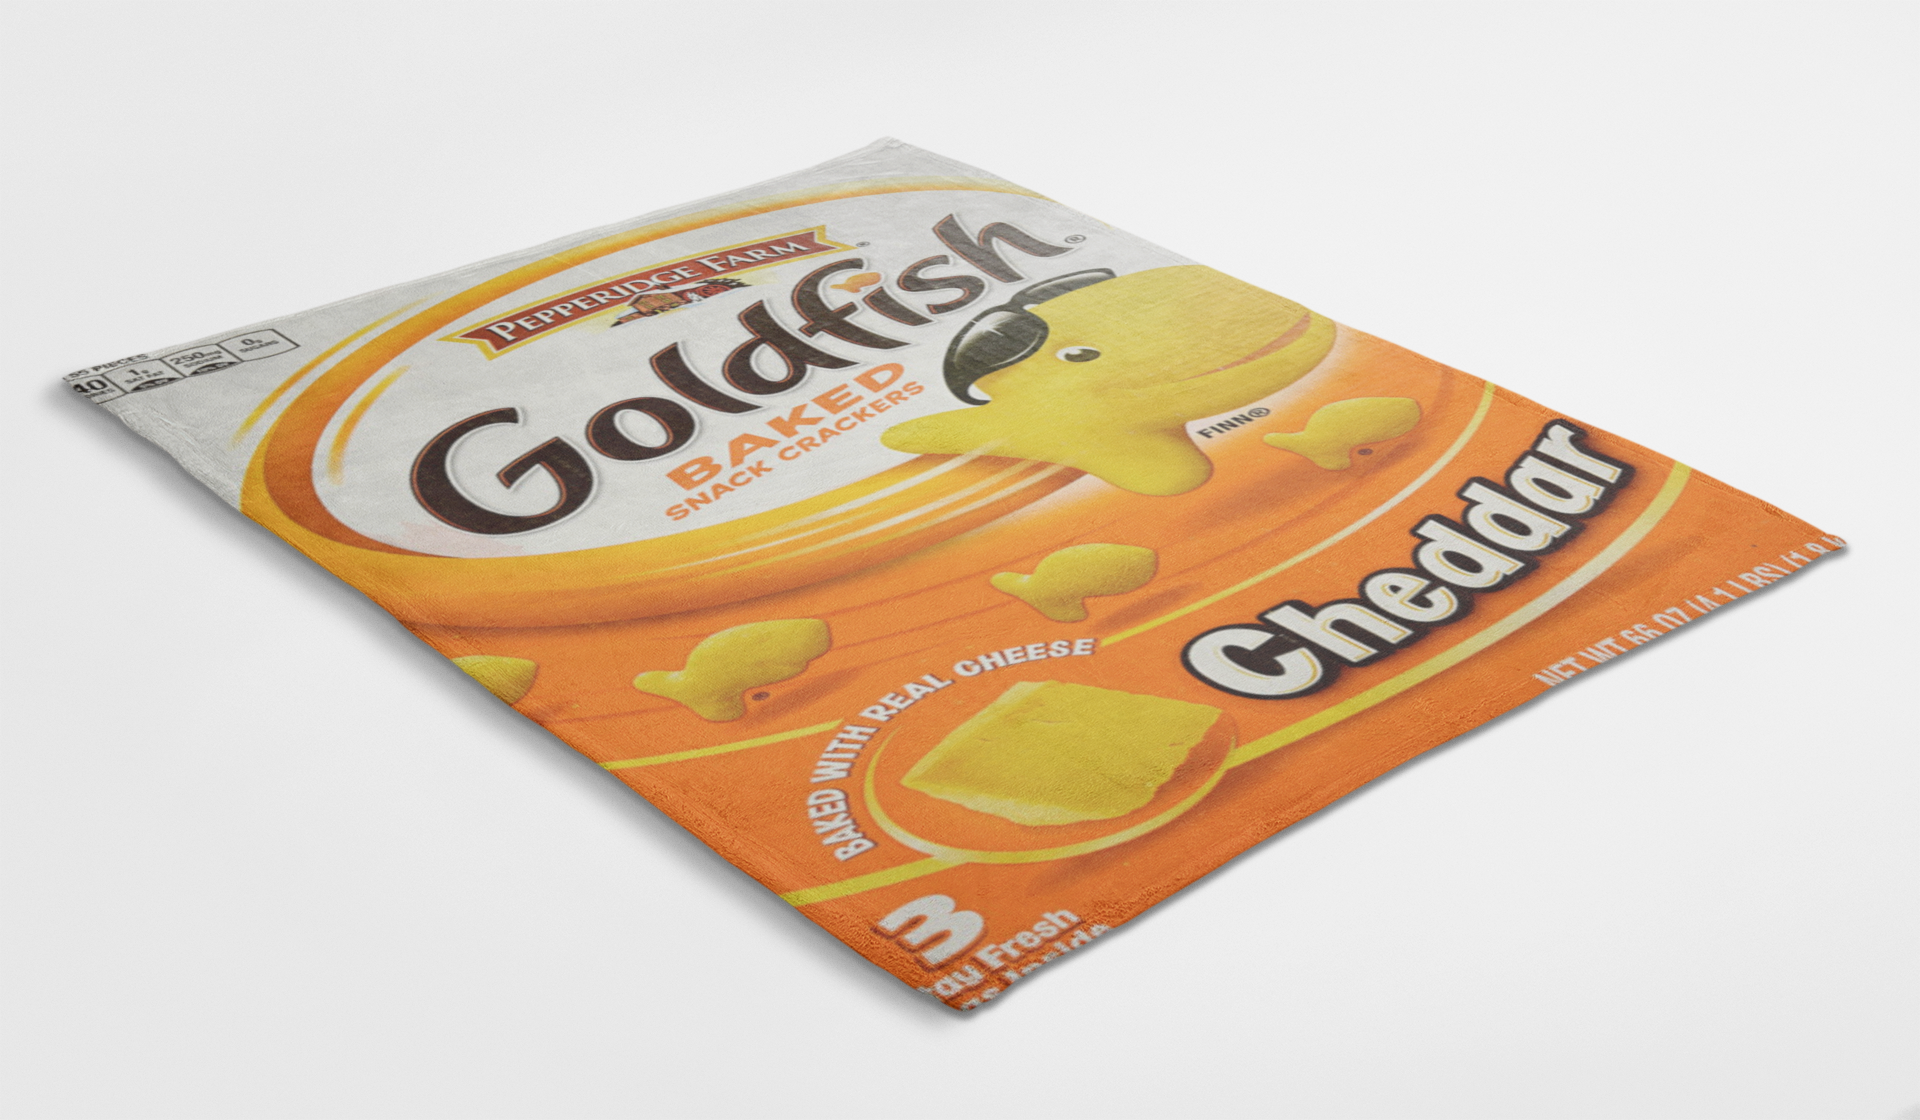 Goldfish Crackers Cheddar Blanket